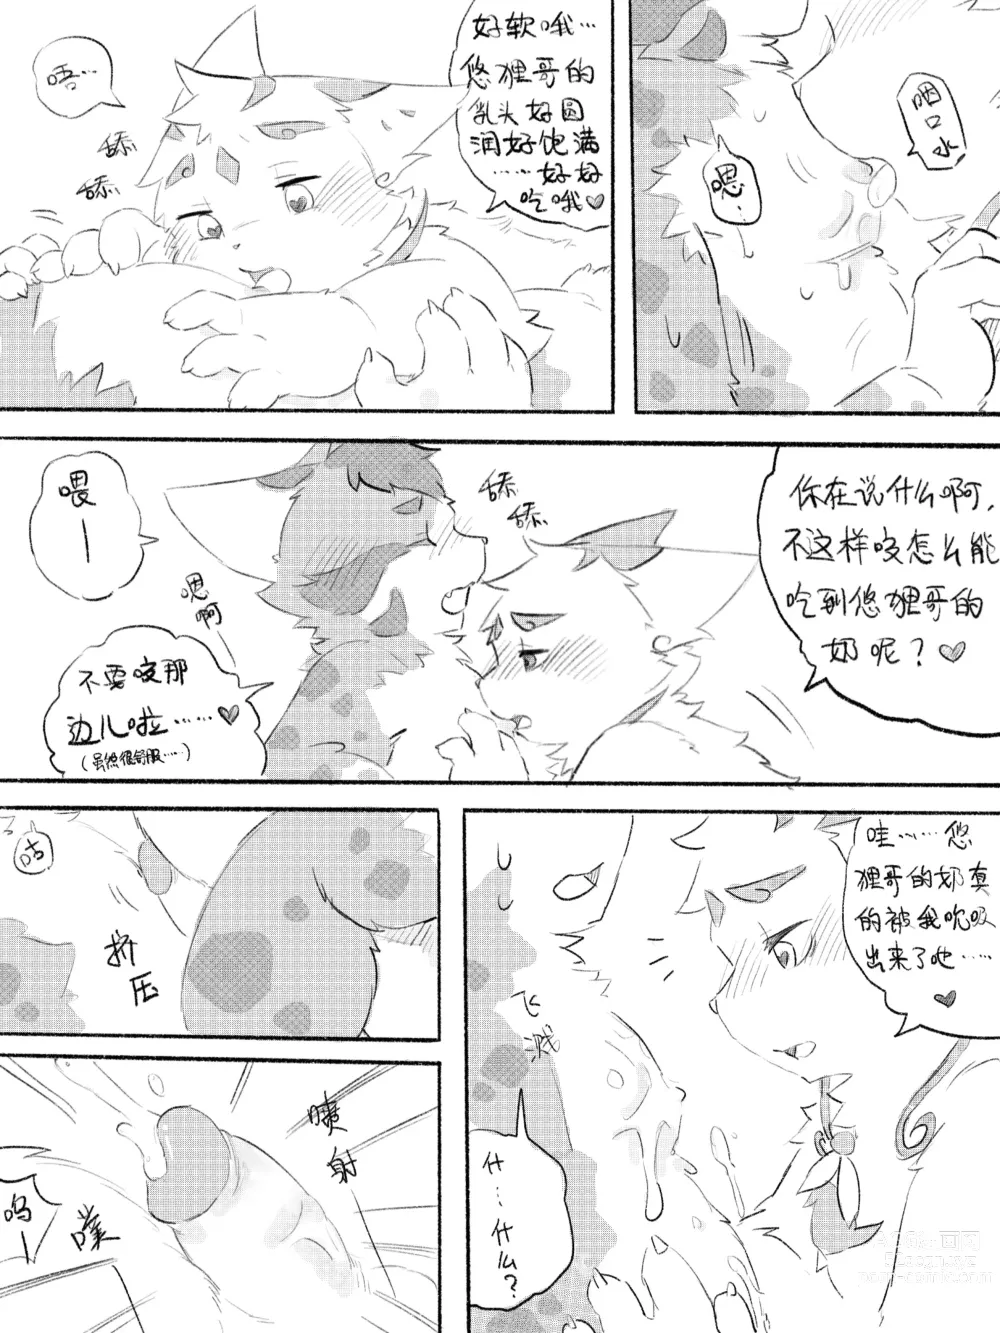 Page 92 of doujinshi 京剧猫同人本悠狸×白糖